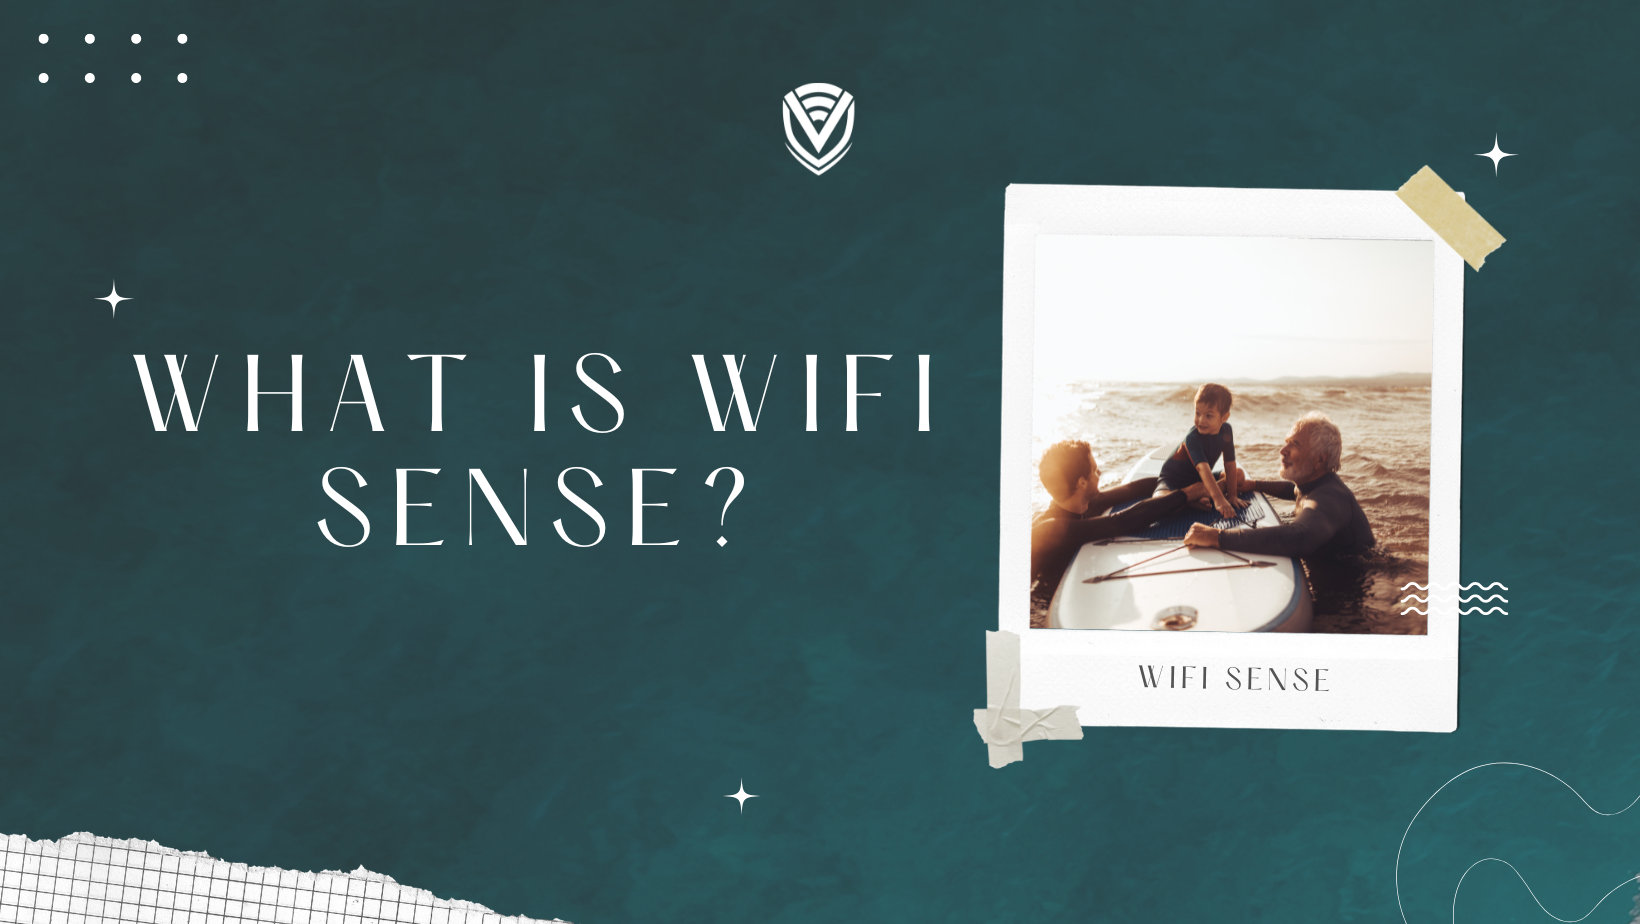 A detailed guide on Wi-Fi Sense